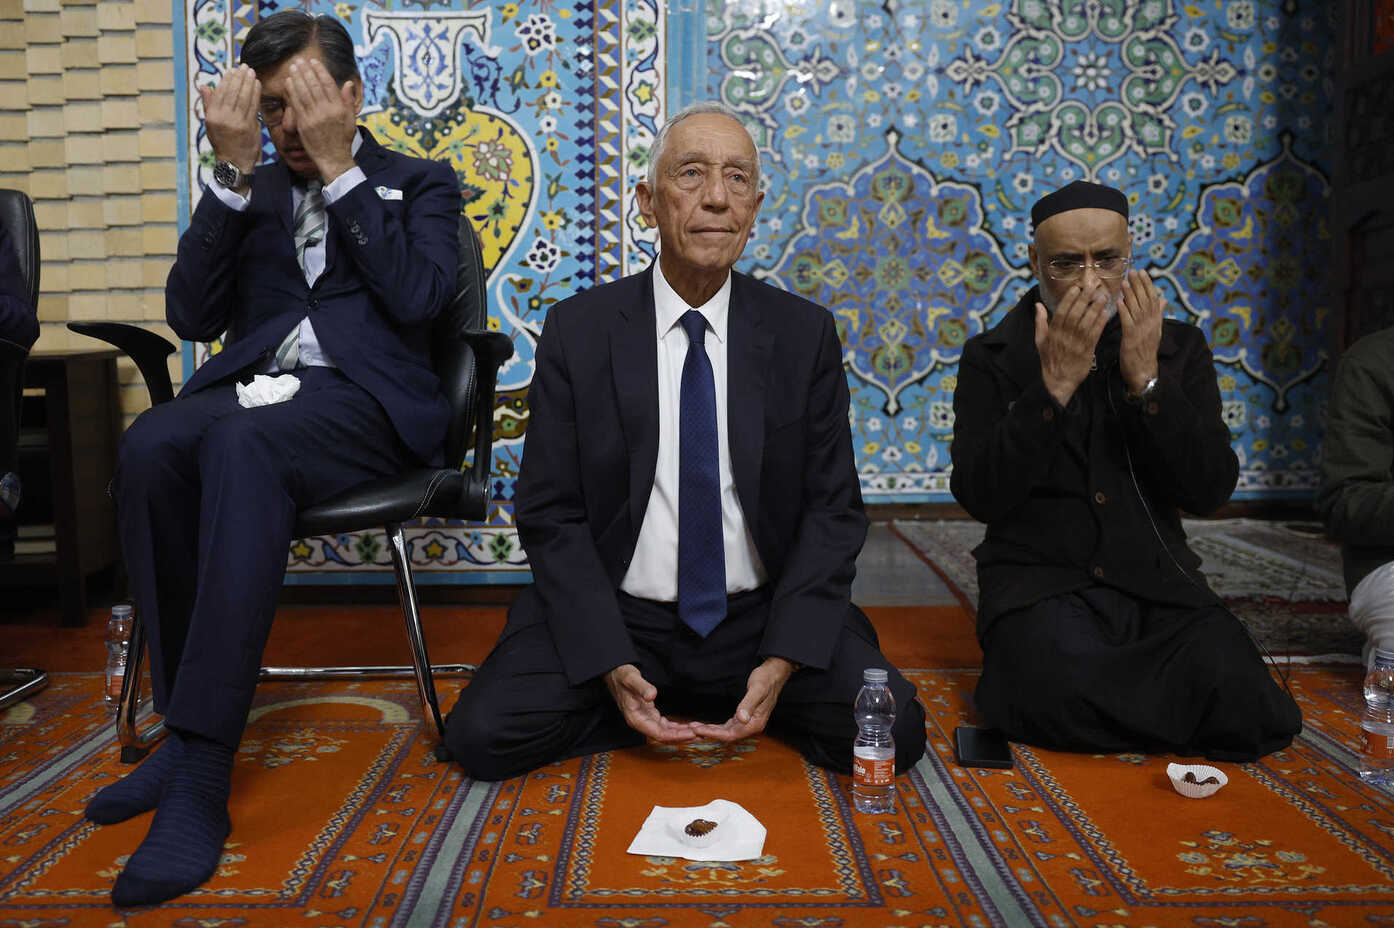 The President of the Portuguese Republic participates in breaking the Ramadan fast